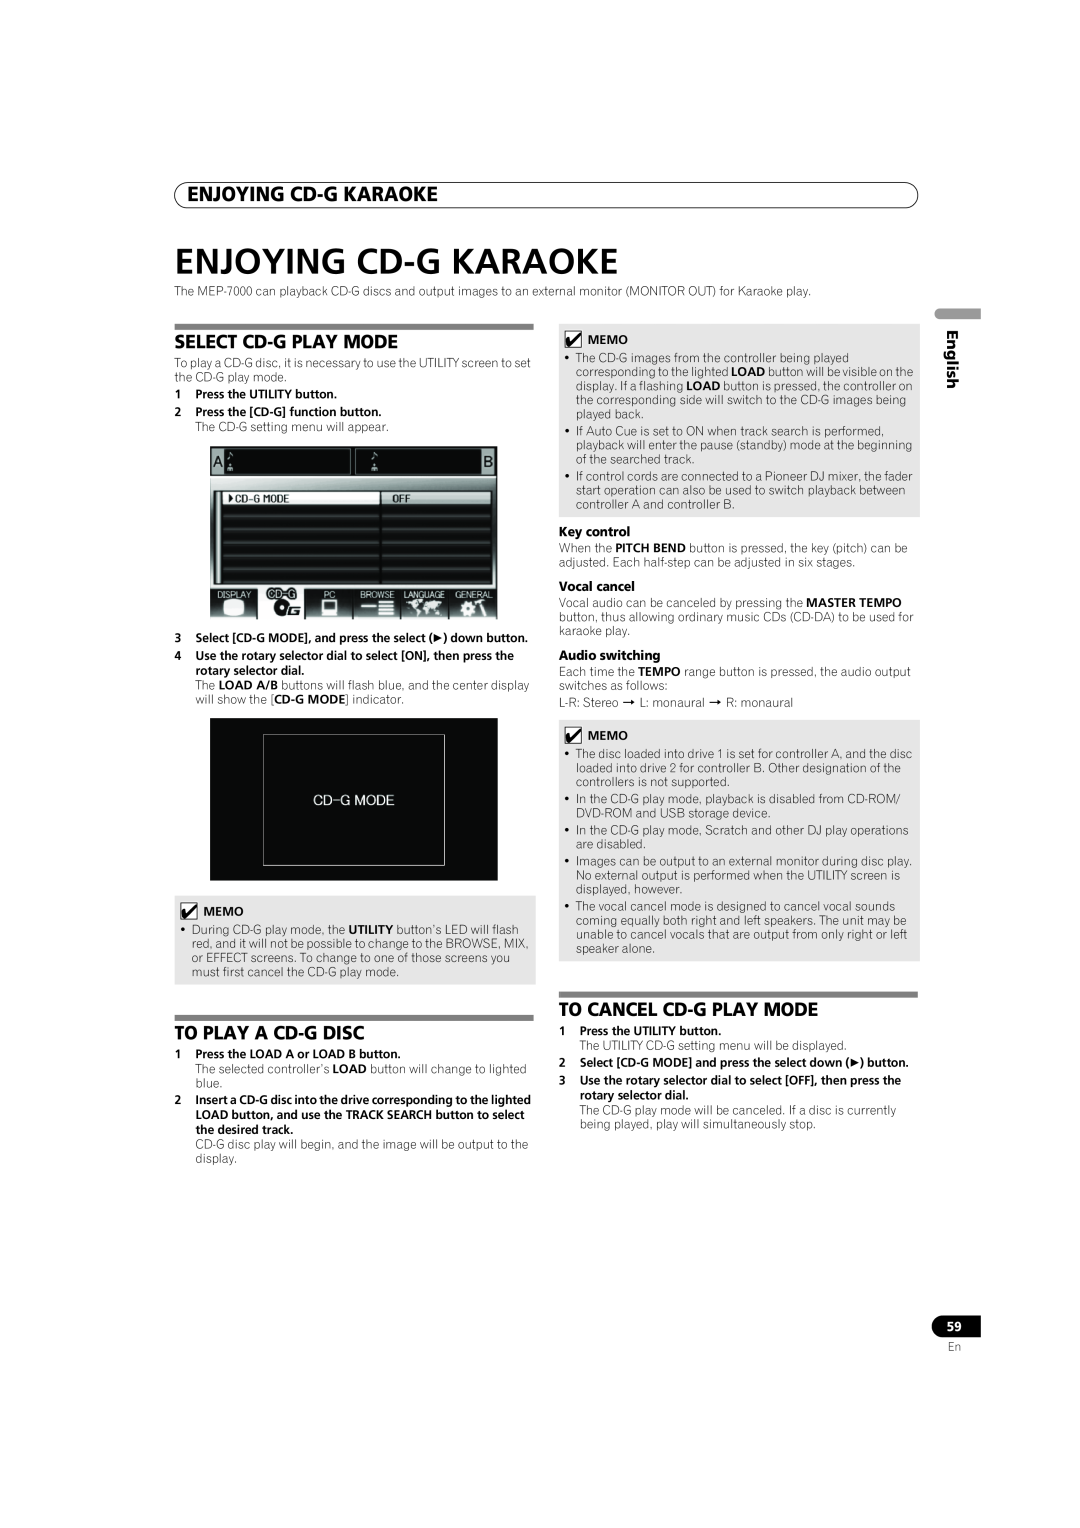 Pioneer MEP-7000 Enjoying Cd-Gkaraoke, Select Cd-Gplay Mode, To Play A Cd-Gdisc, To Cancel Cd-Gplay Mode, English 